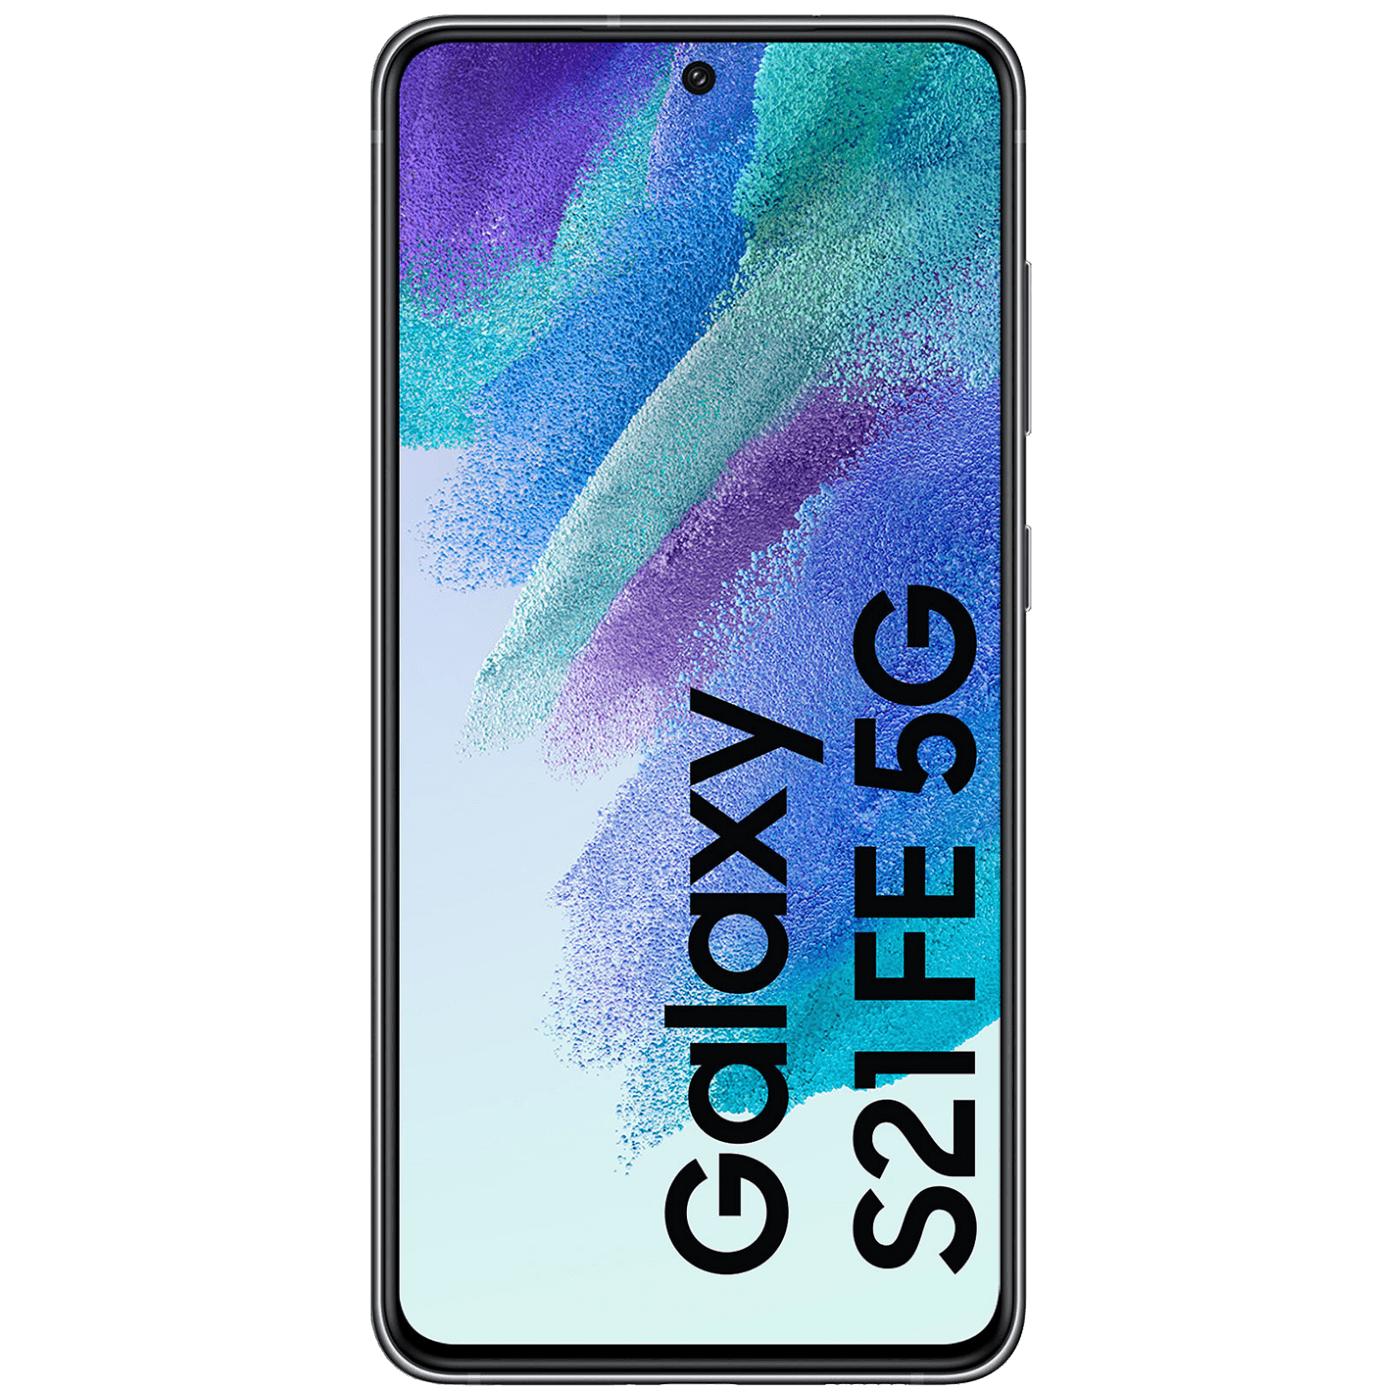 Galaxy S21 FE 5G 6GB/128GB Graphite - Samsung